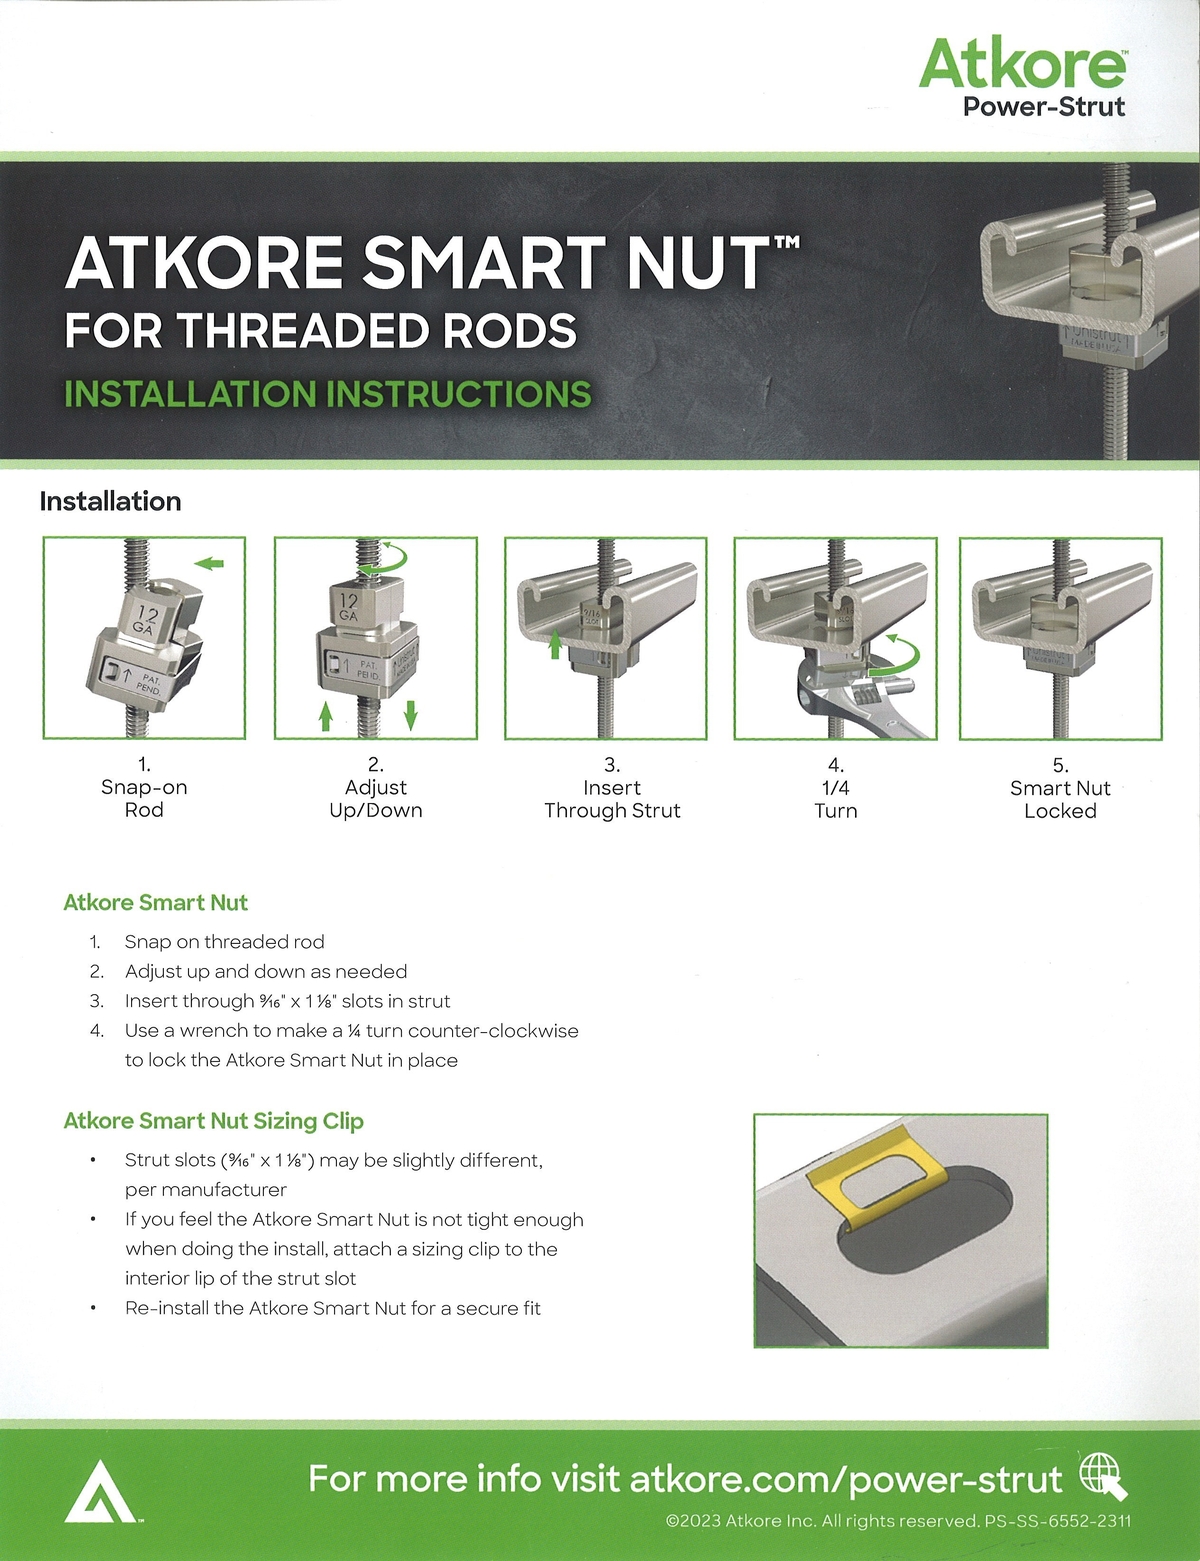 All New Atkore Smart Nut